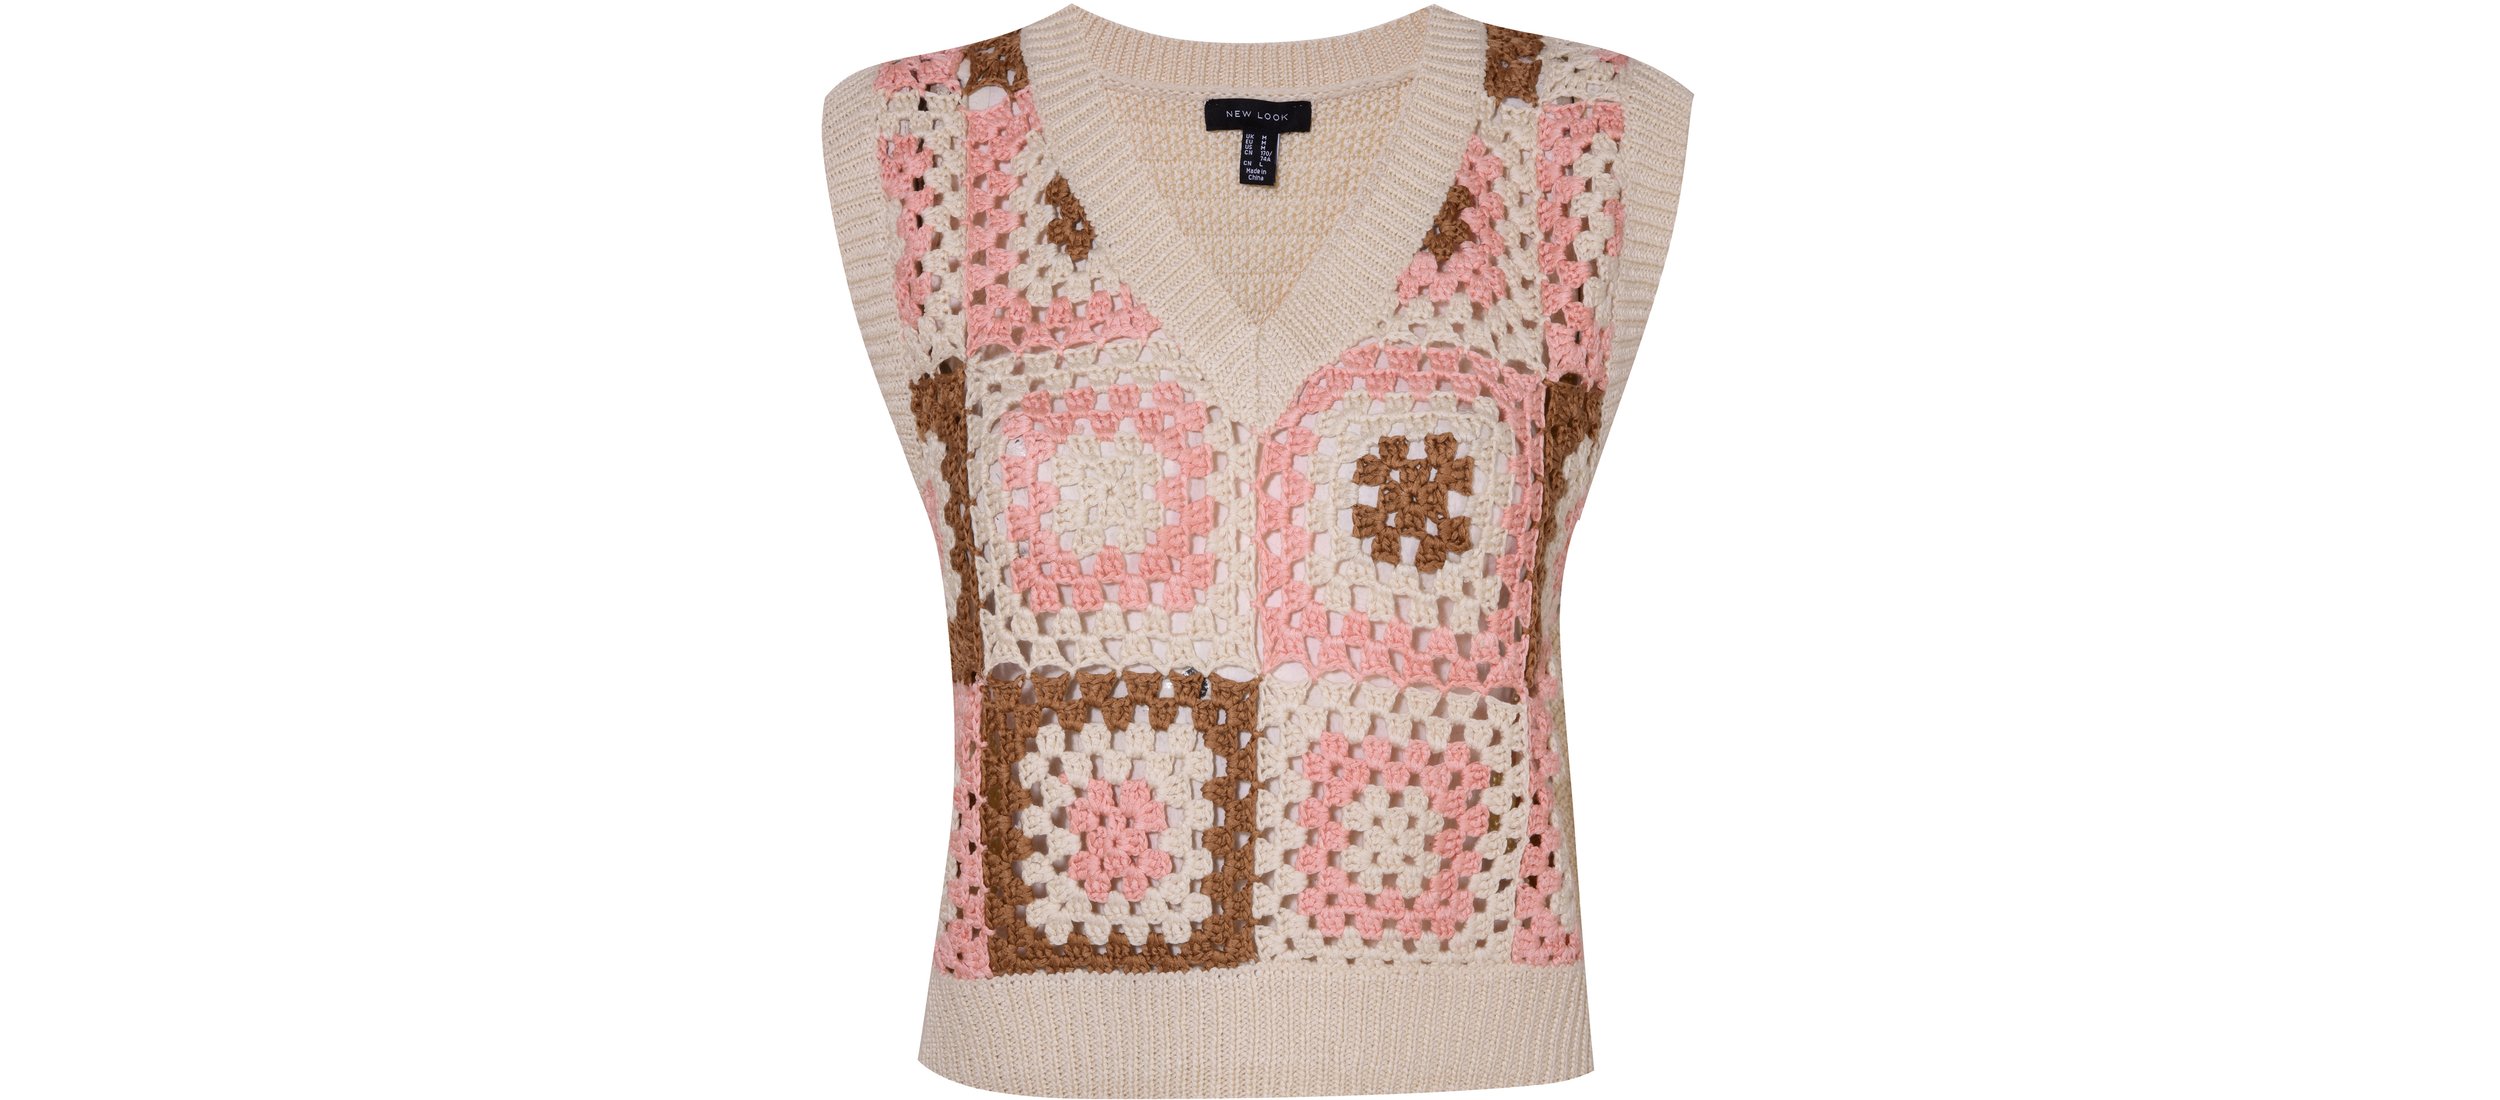 11 New Look Pink Crochet Sleeveless Vest €49.99,